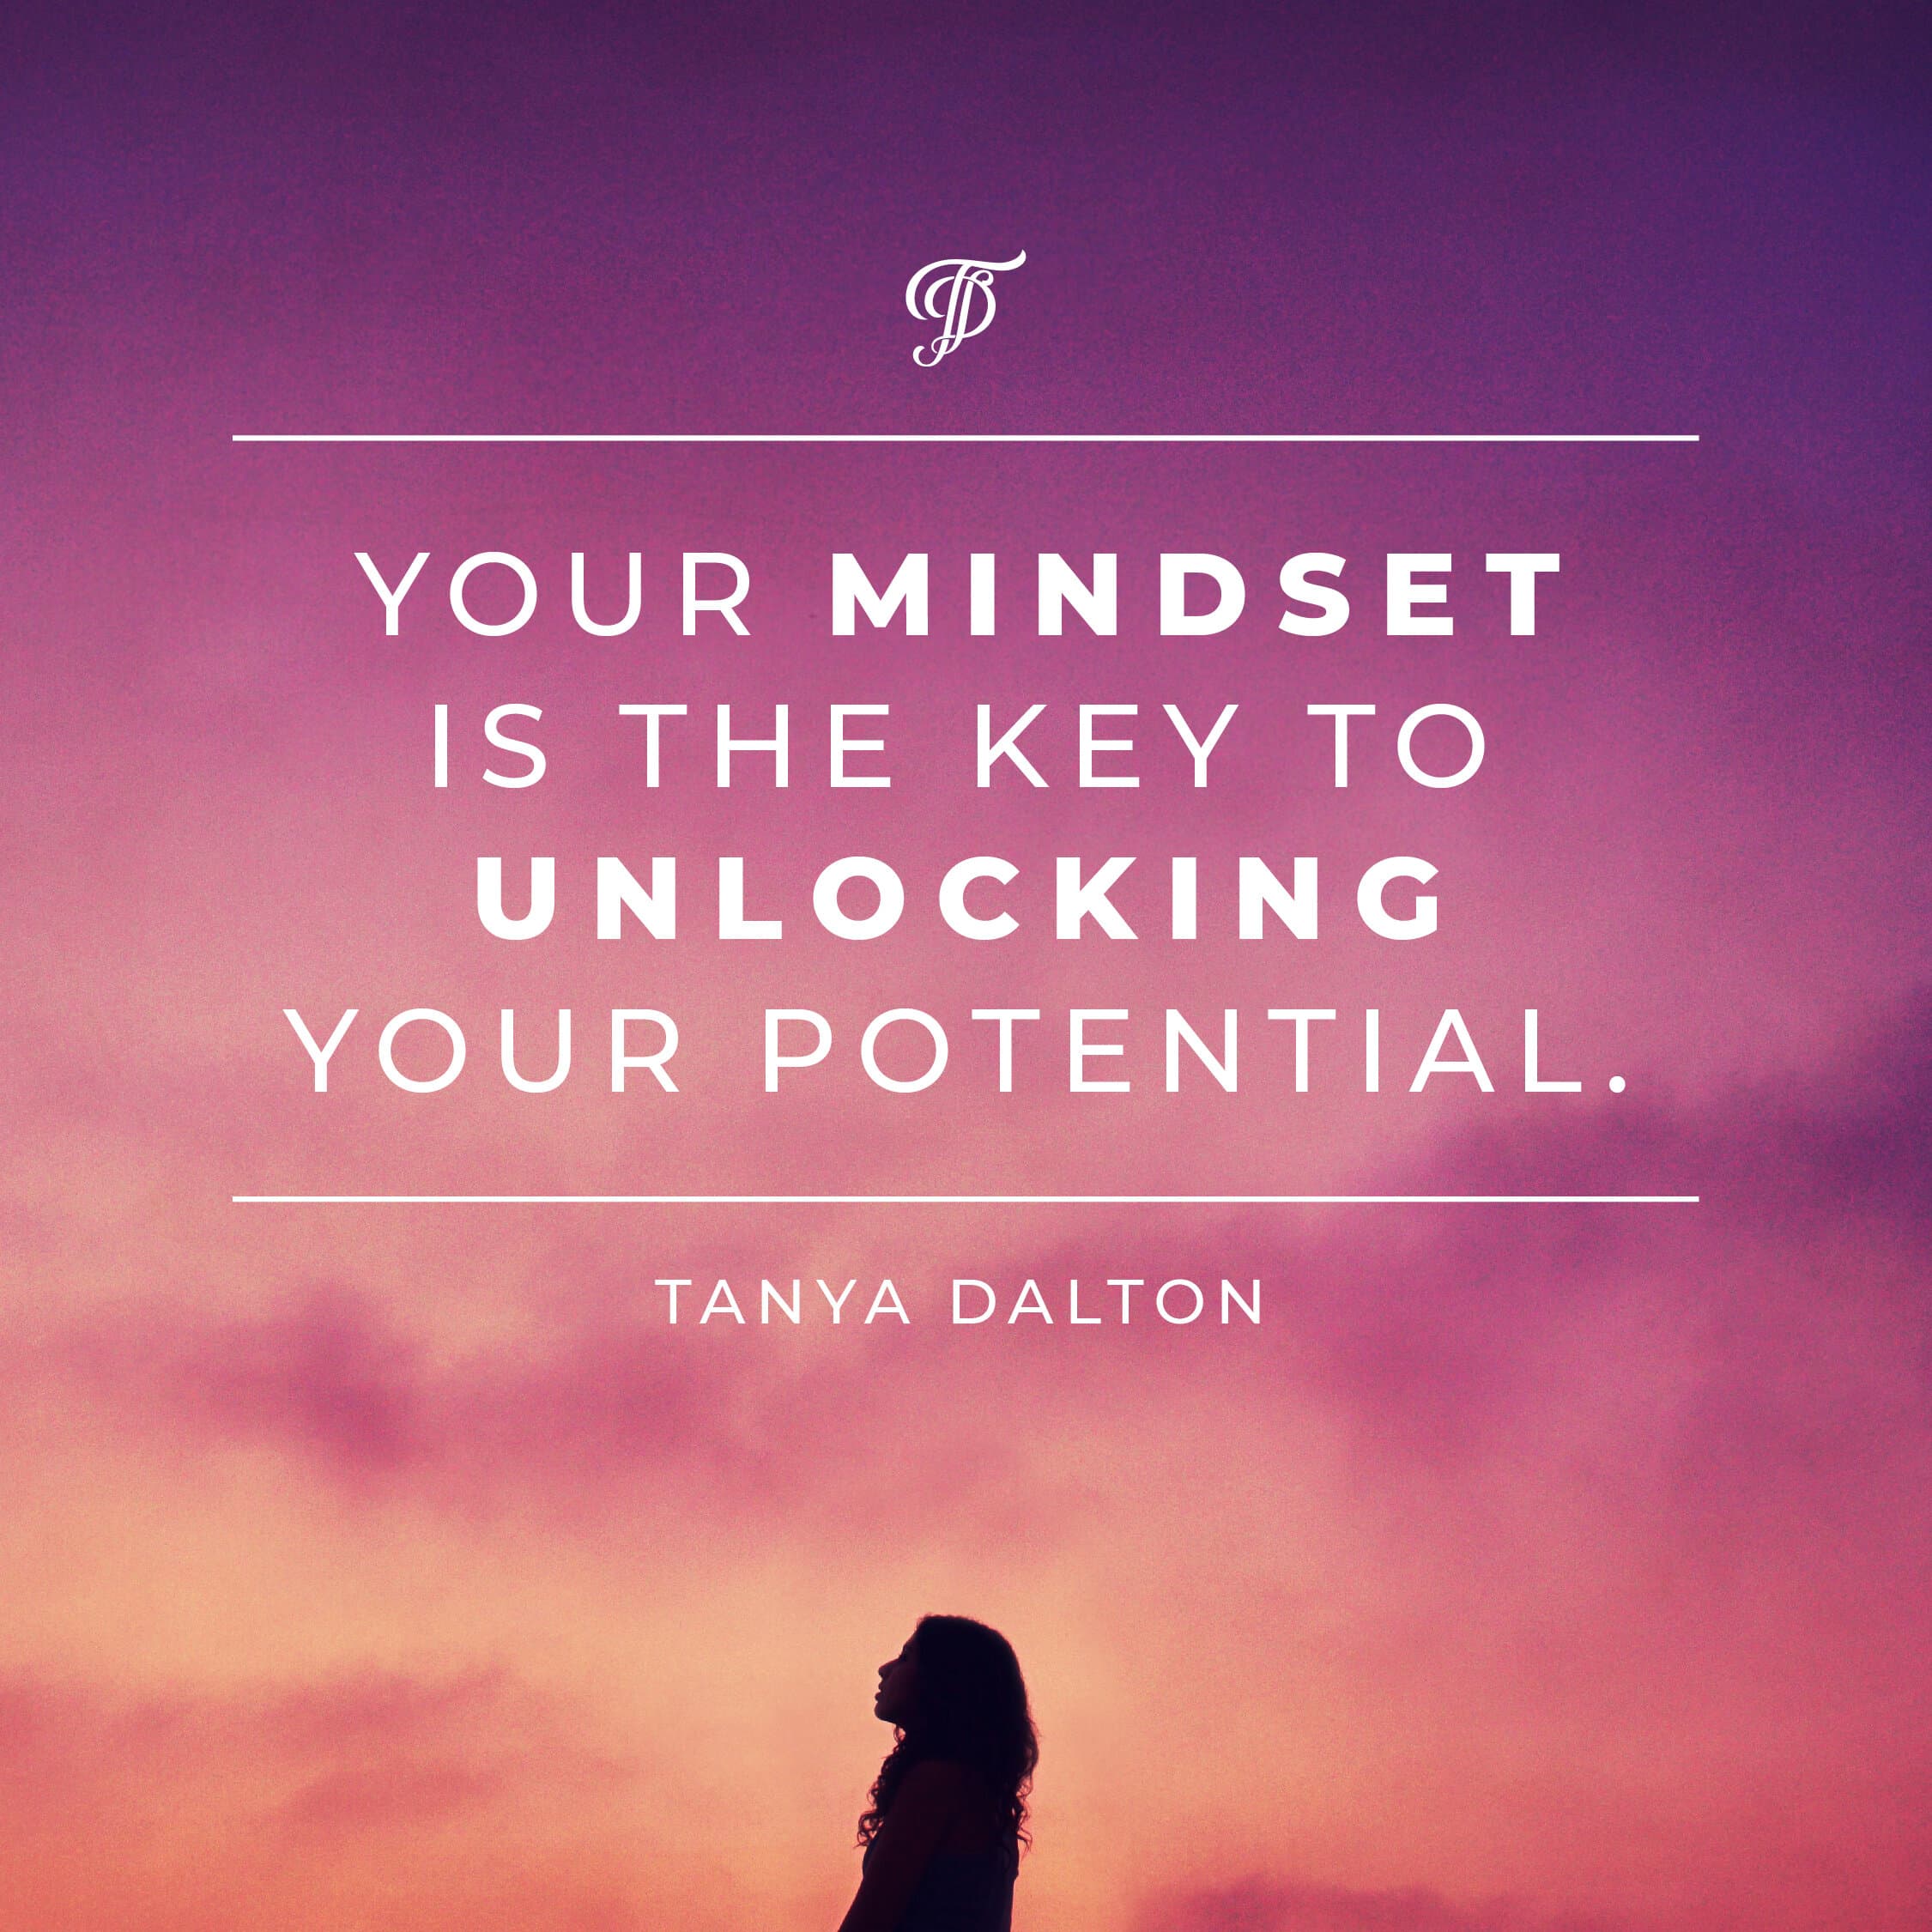 Tanya Dalton quote on mindset